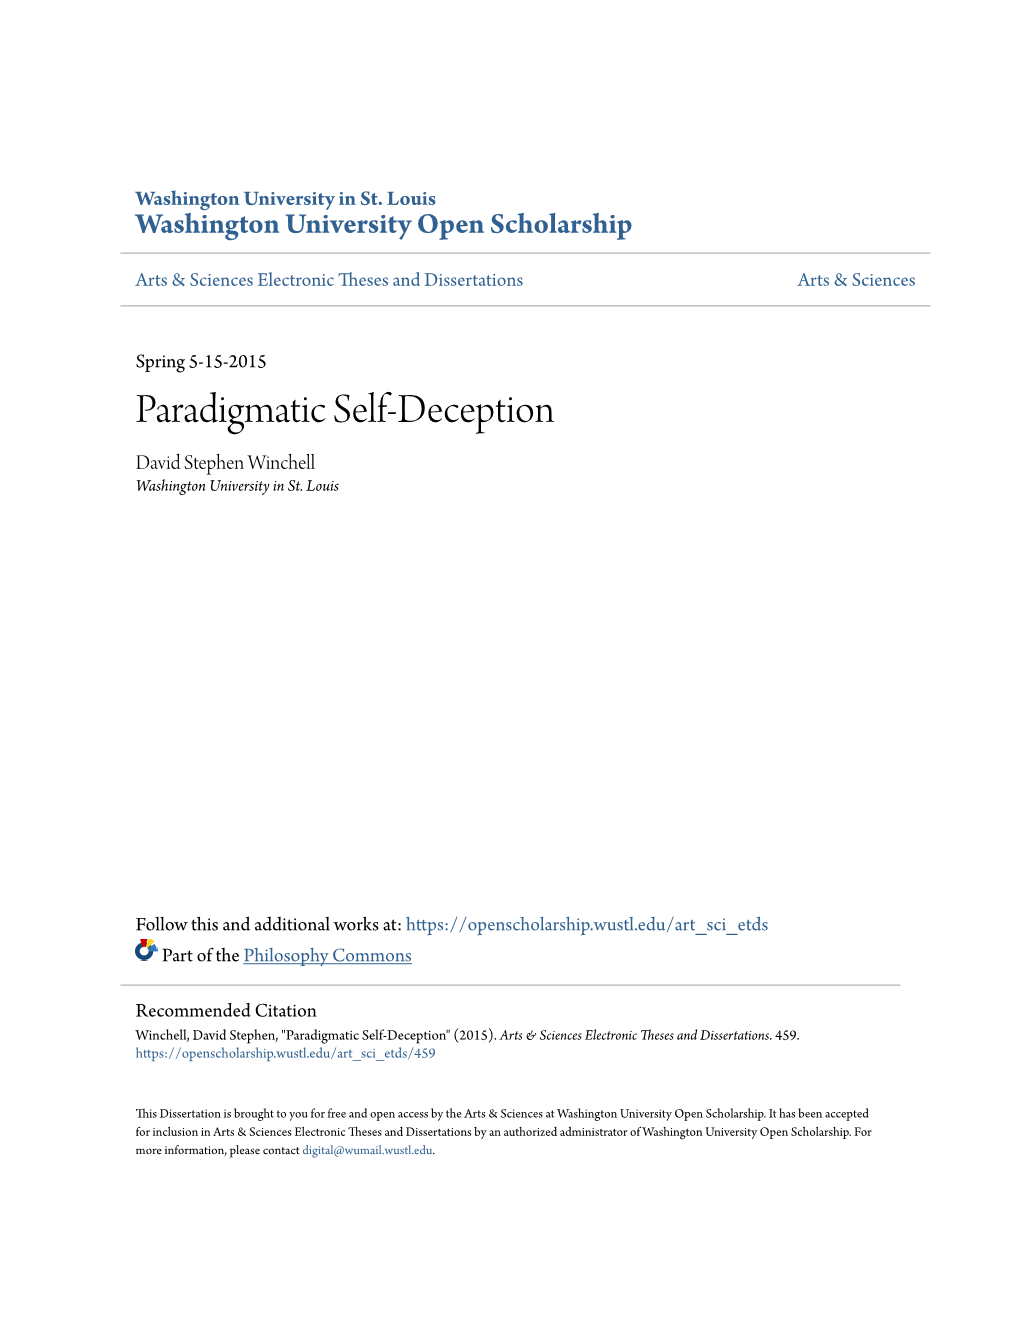 Paradigmatic Self-Deception David Stephen Winchell Washington University in St